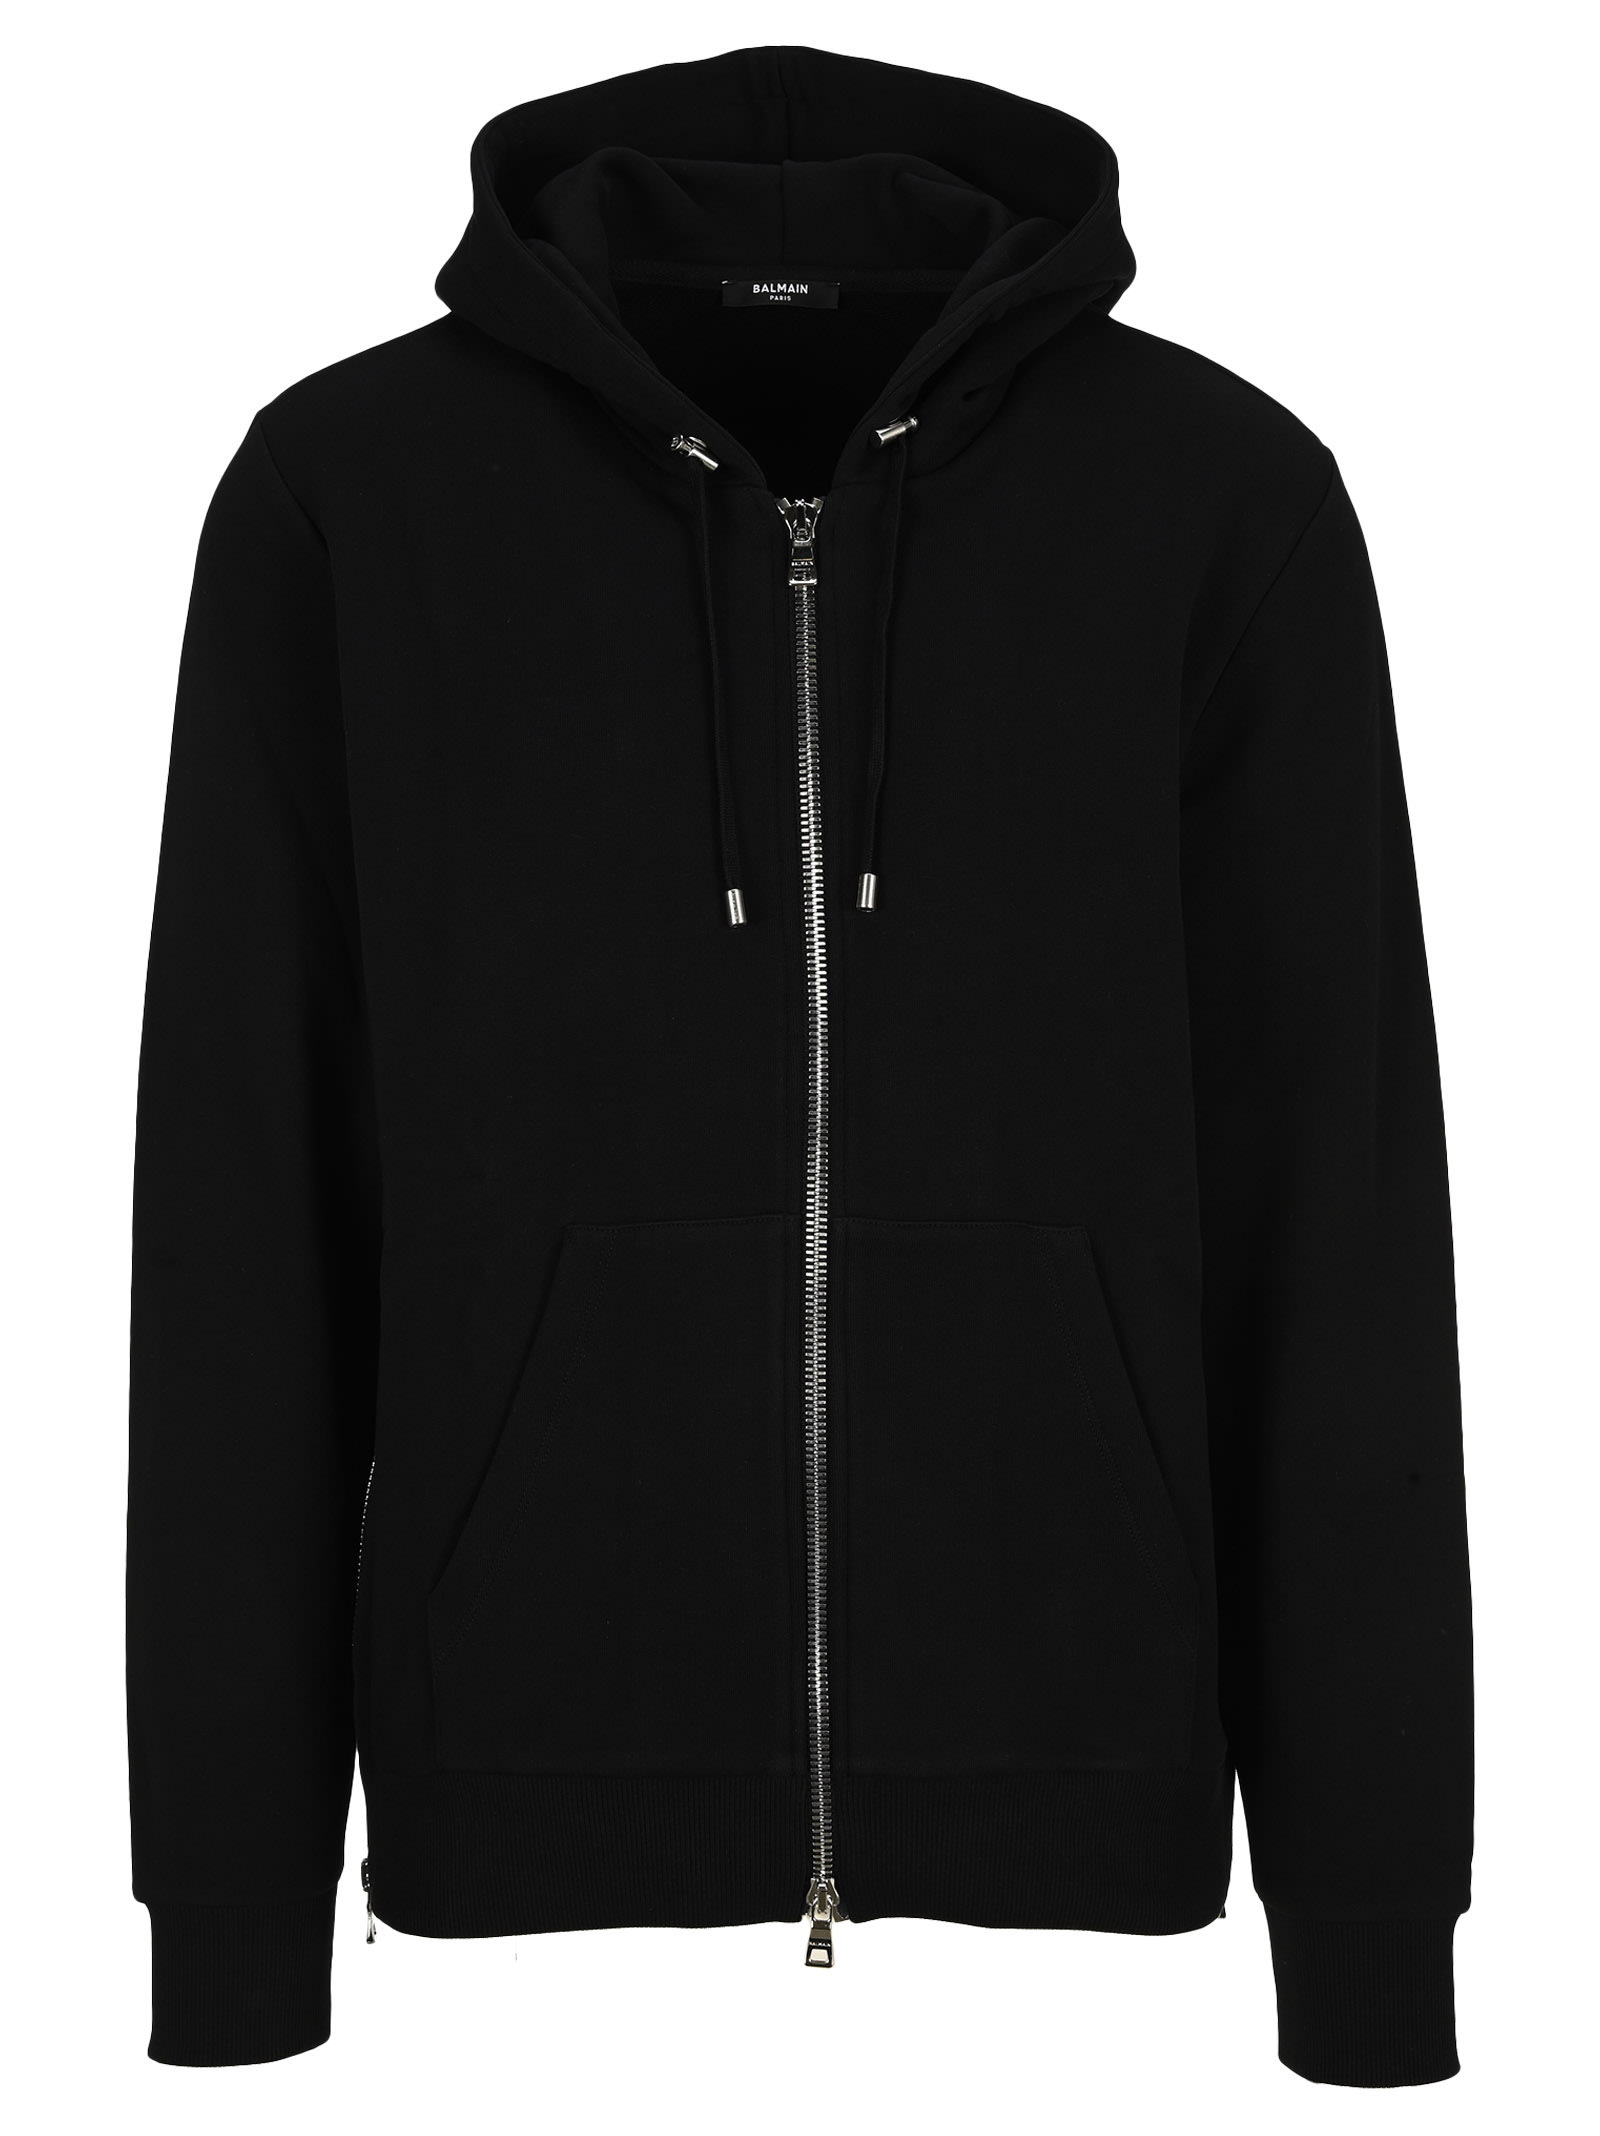 Balmain Black Cotton Hooded Sweatshirt With Balmain Logo